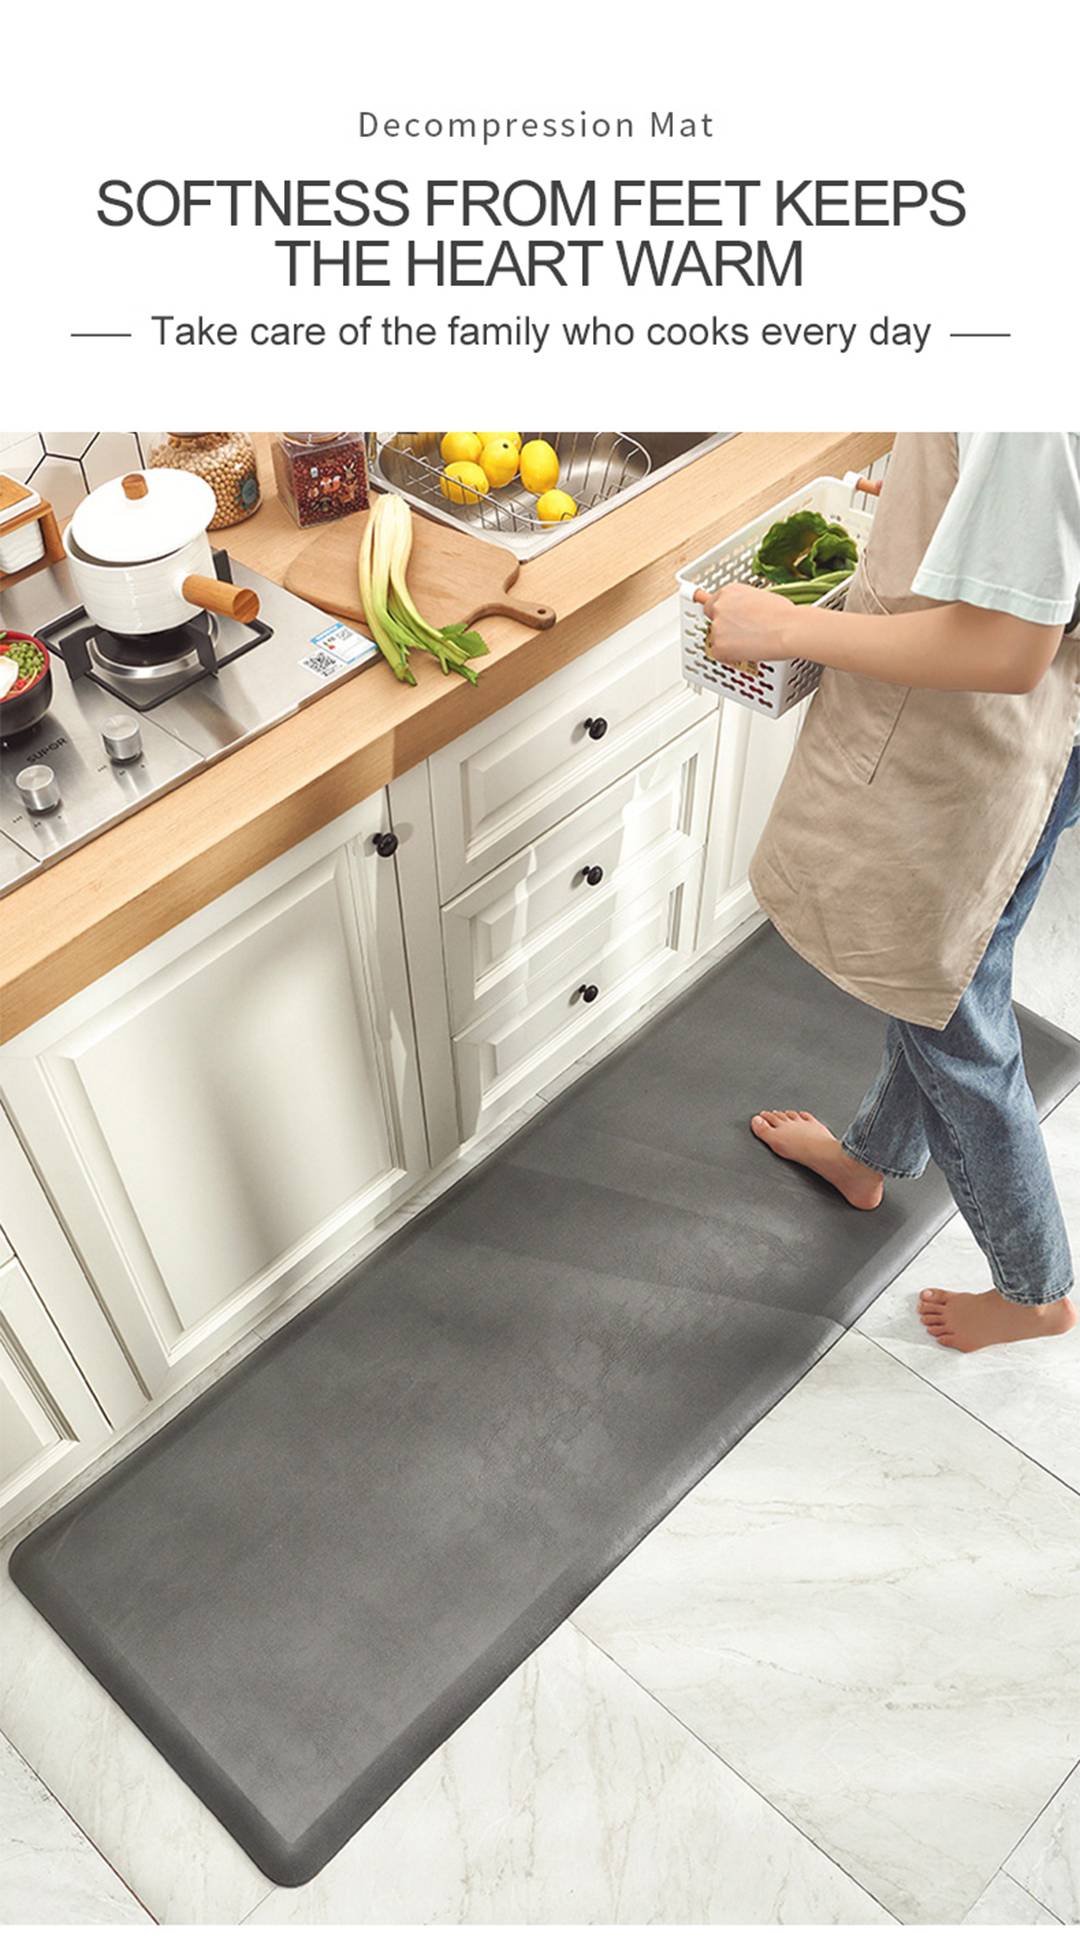 Brighten Any Room With Wholesale water absorbent kitchen floor mat